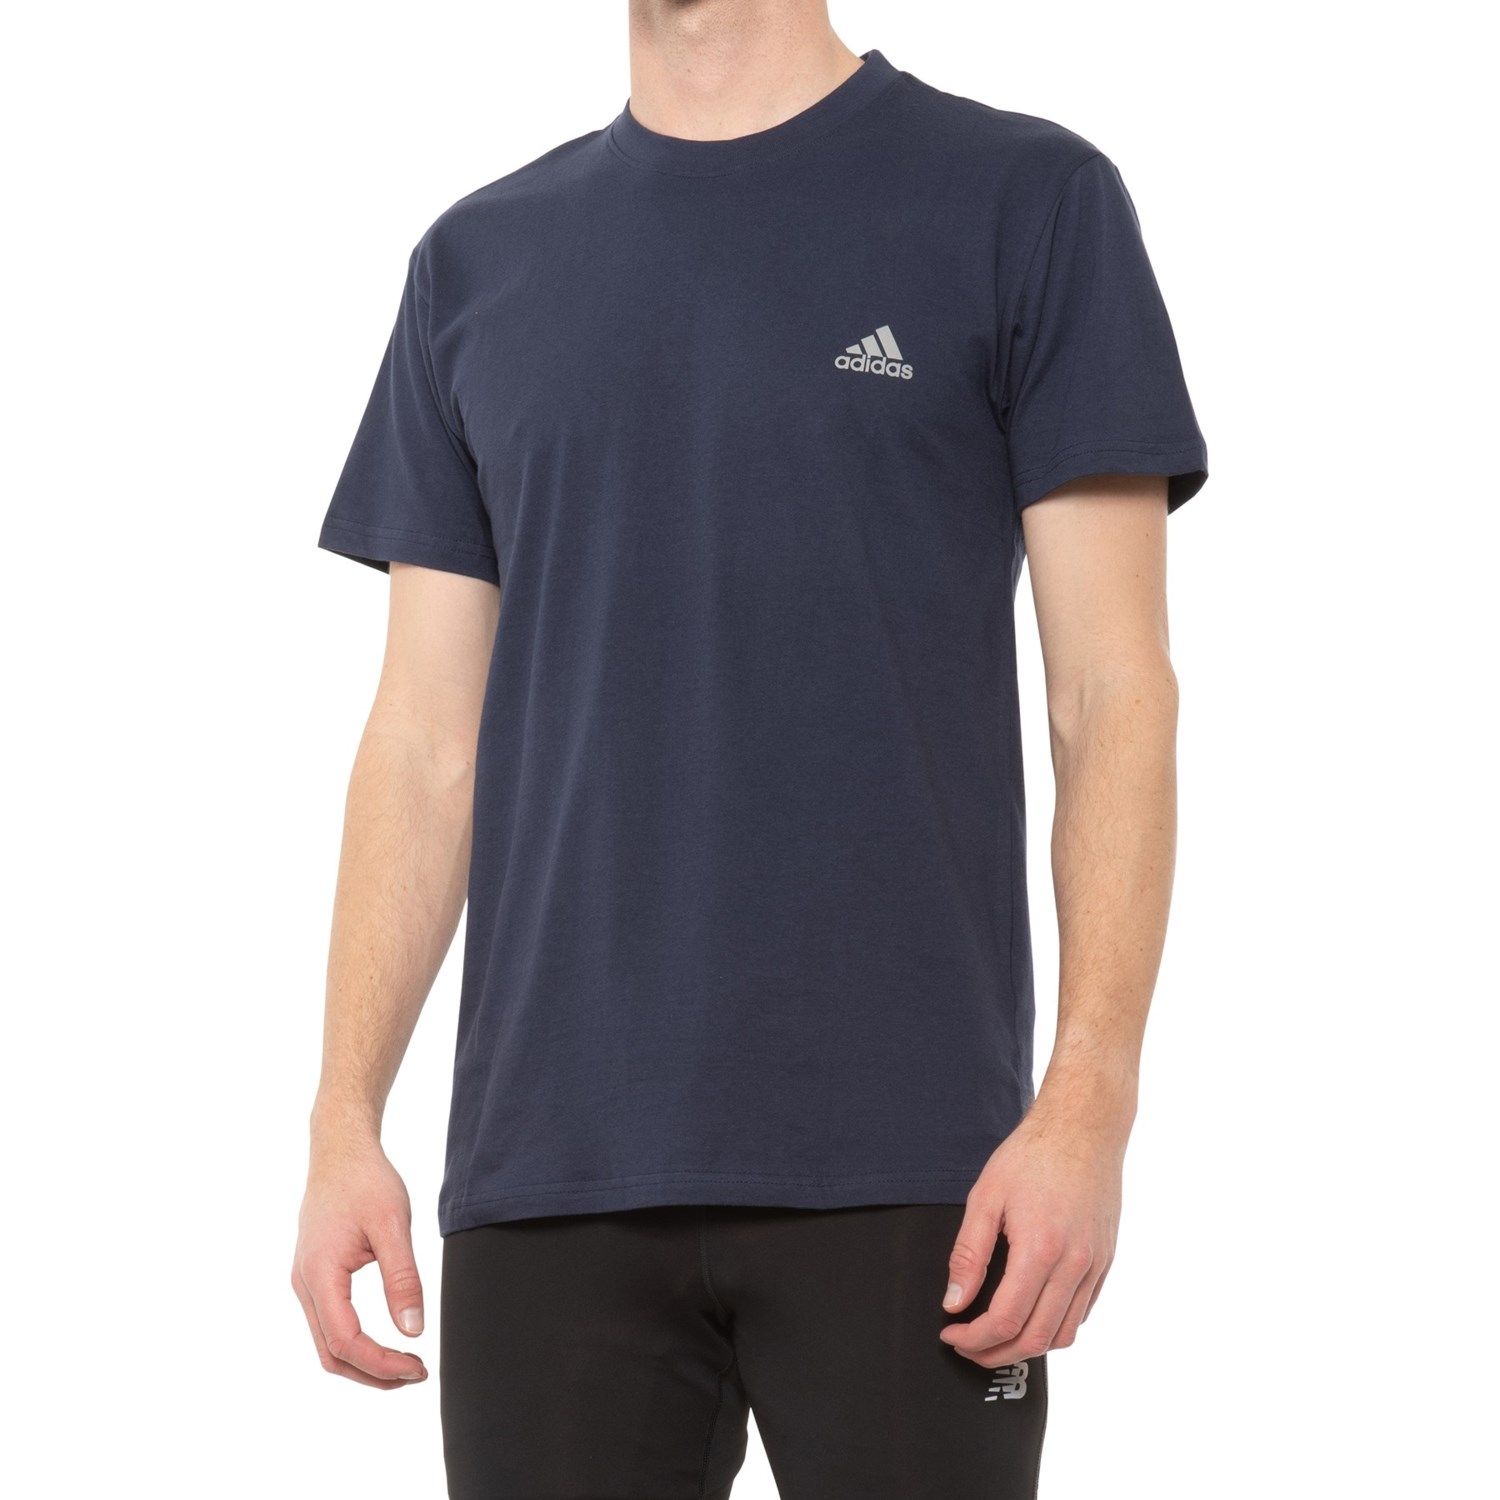 Adidas Logo Mountain Shirt - Short Sleeve (For Men)